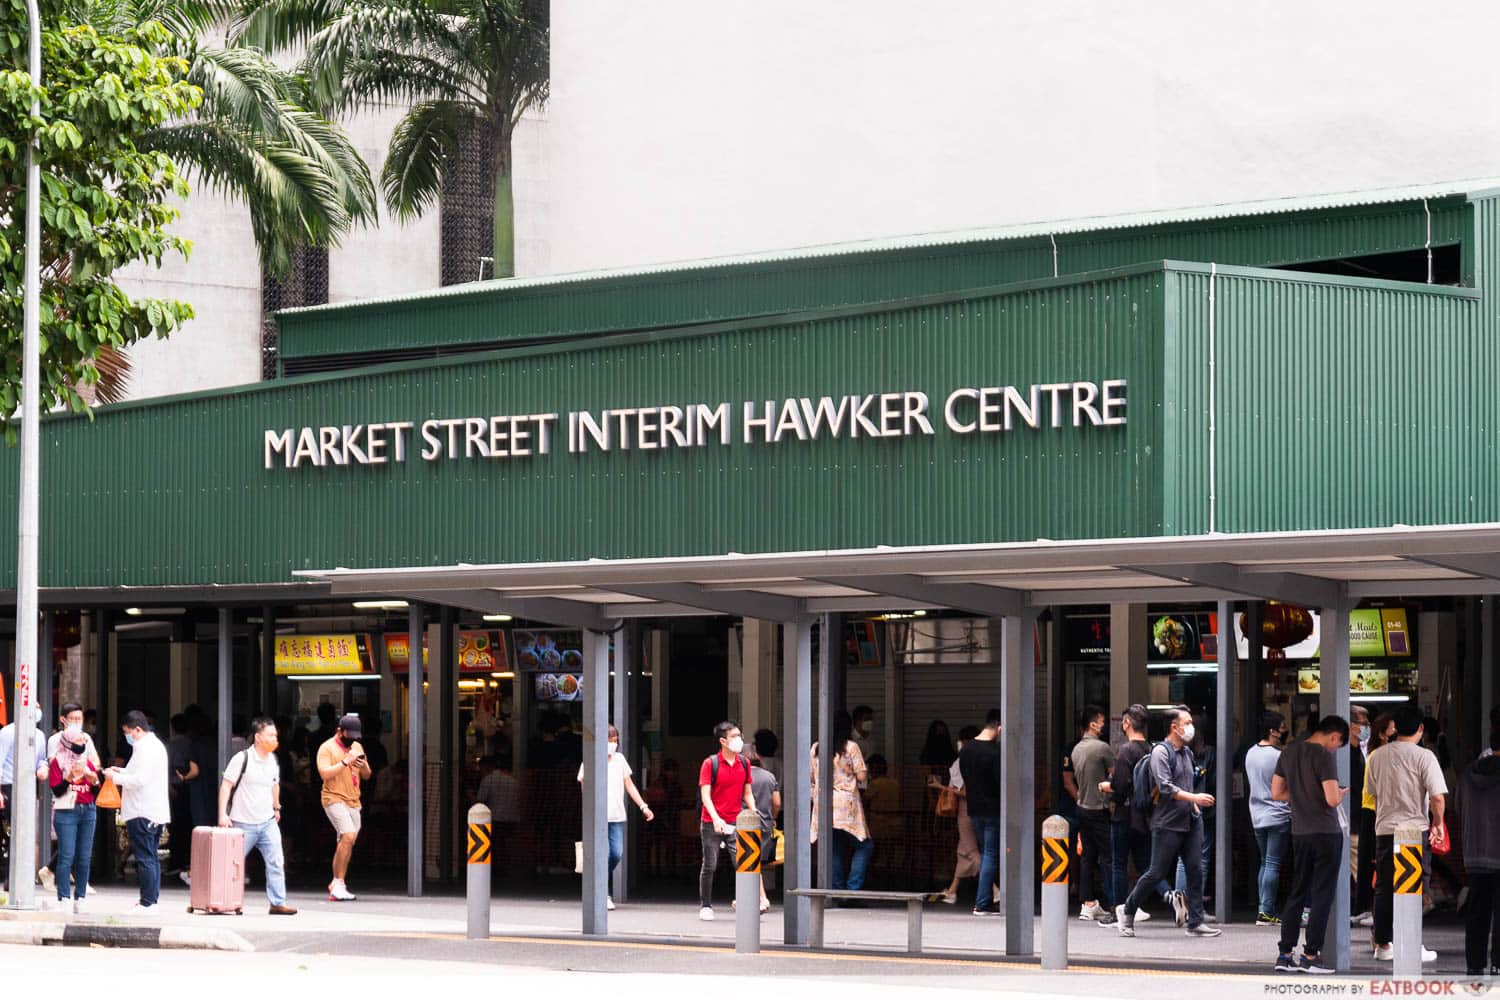 Market Street Interim Hawker Centre